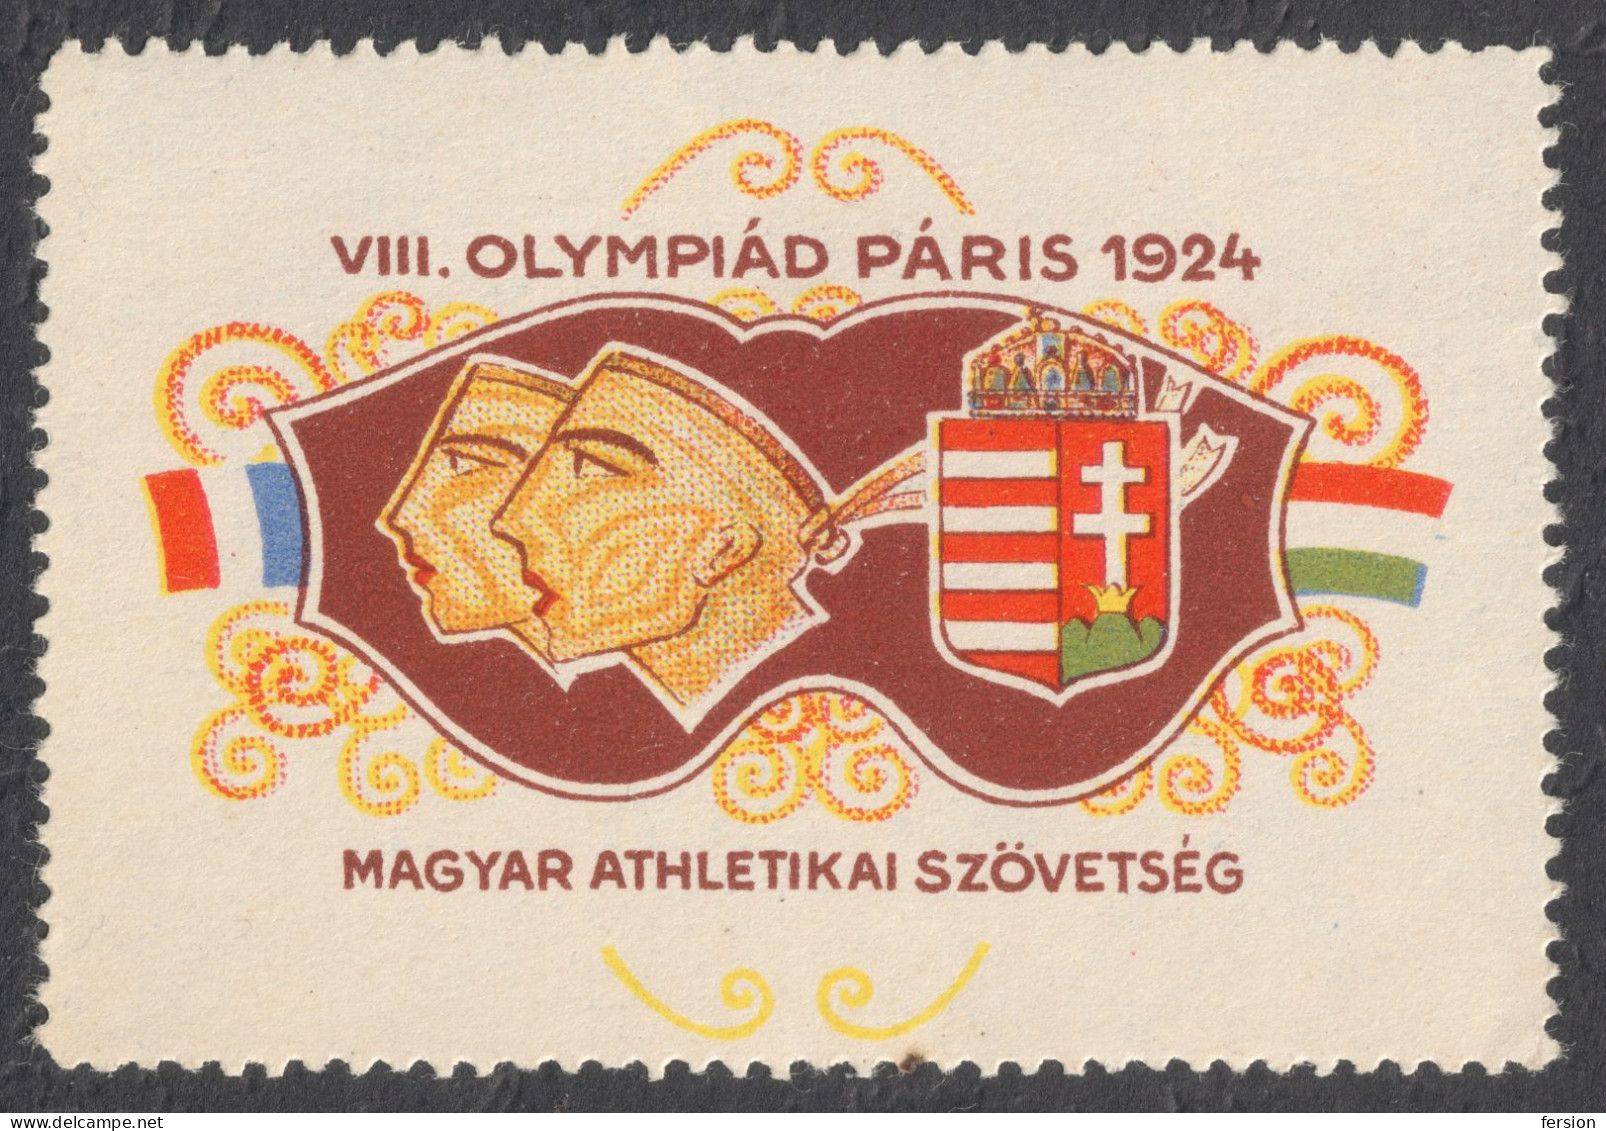 Paris 1924 Olympics Olympic GAMES / France Hungary Athletics MH - LABEL CINDERELLA VIGNETTE FLAG / Coat Of Arms - Ete 1924: Paris